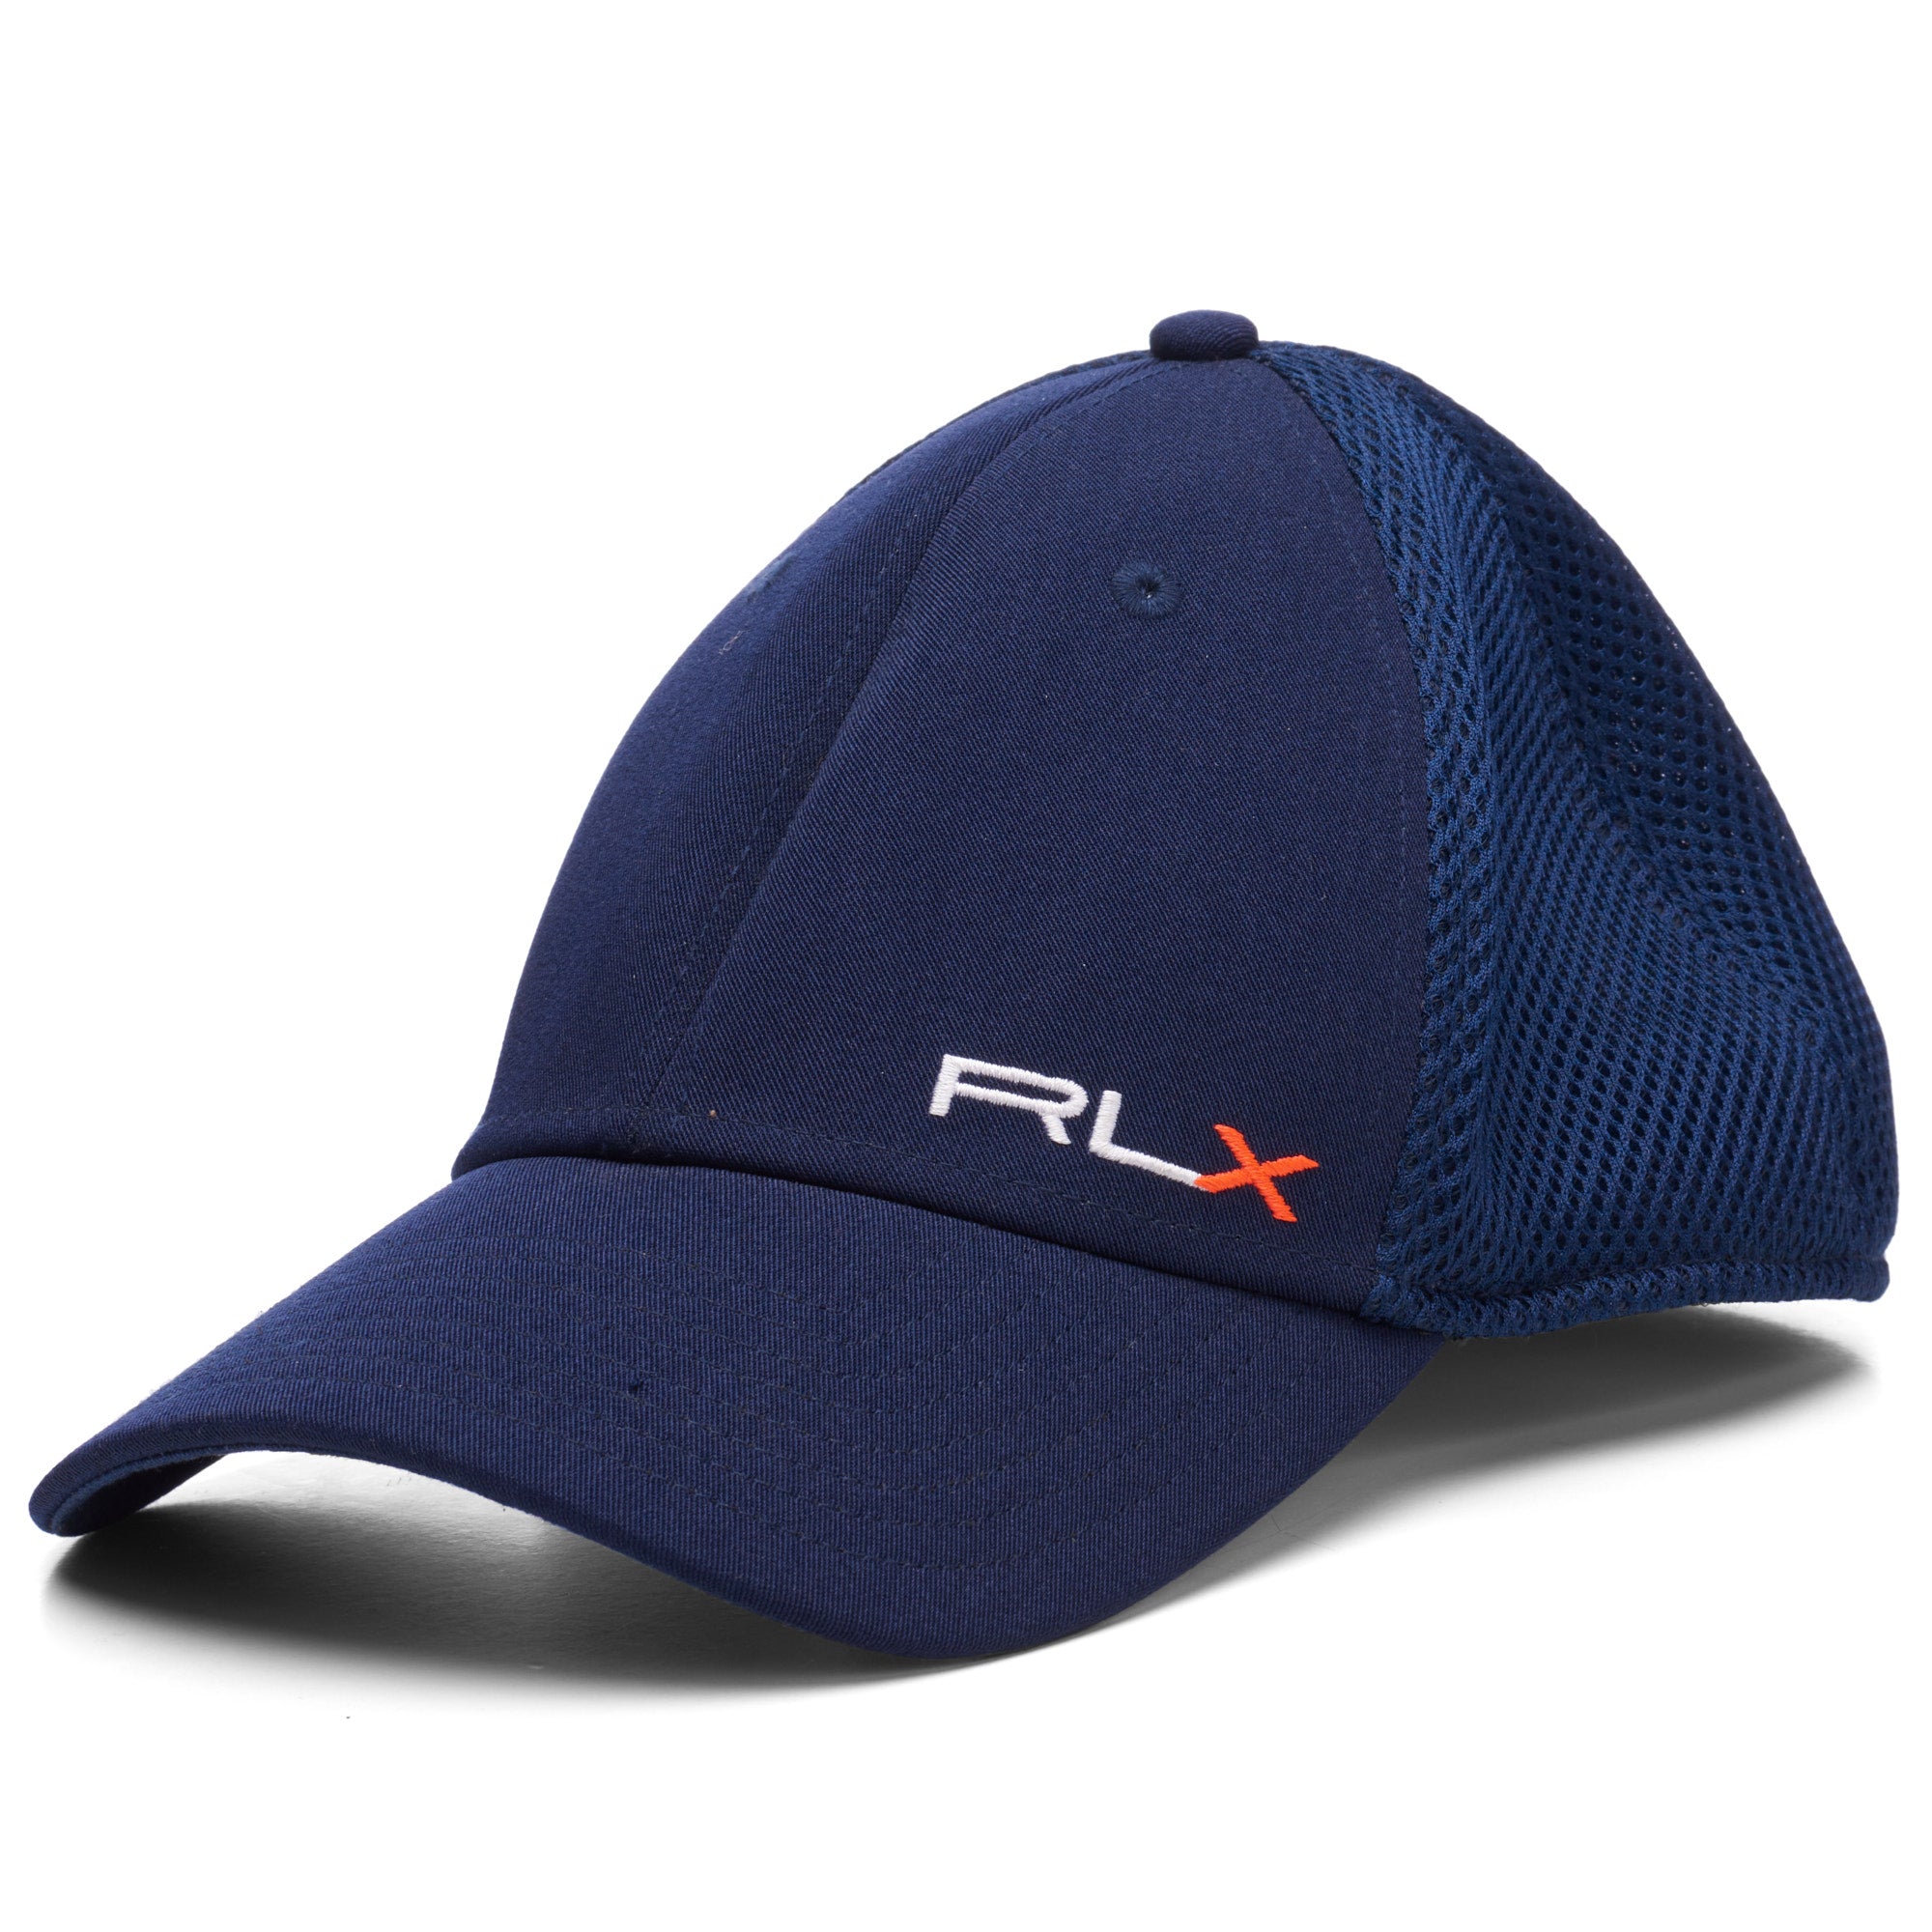 RALPH LAUREN RLX Blue Cotton Cap Golf Size Flex S/M Twill Fit NEW